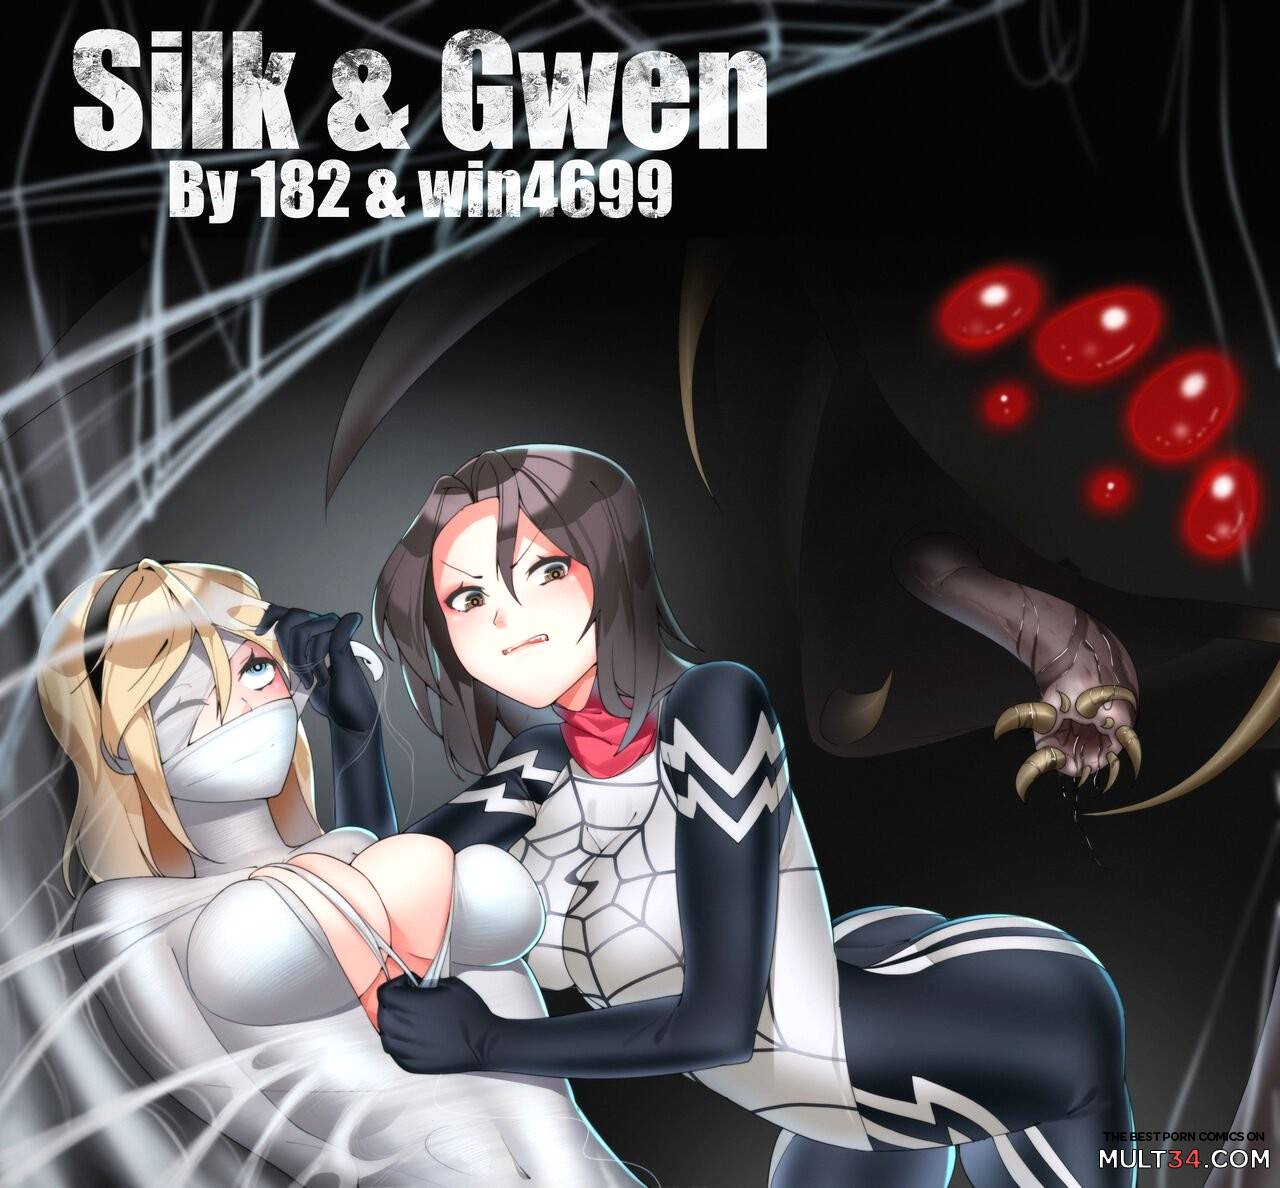 Silk rule 34